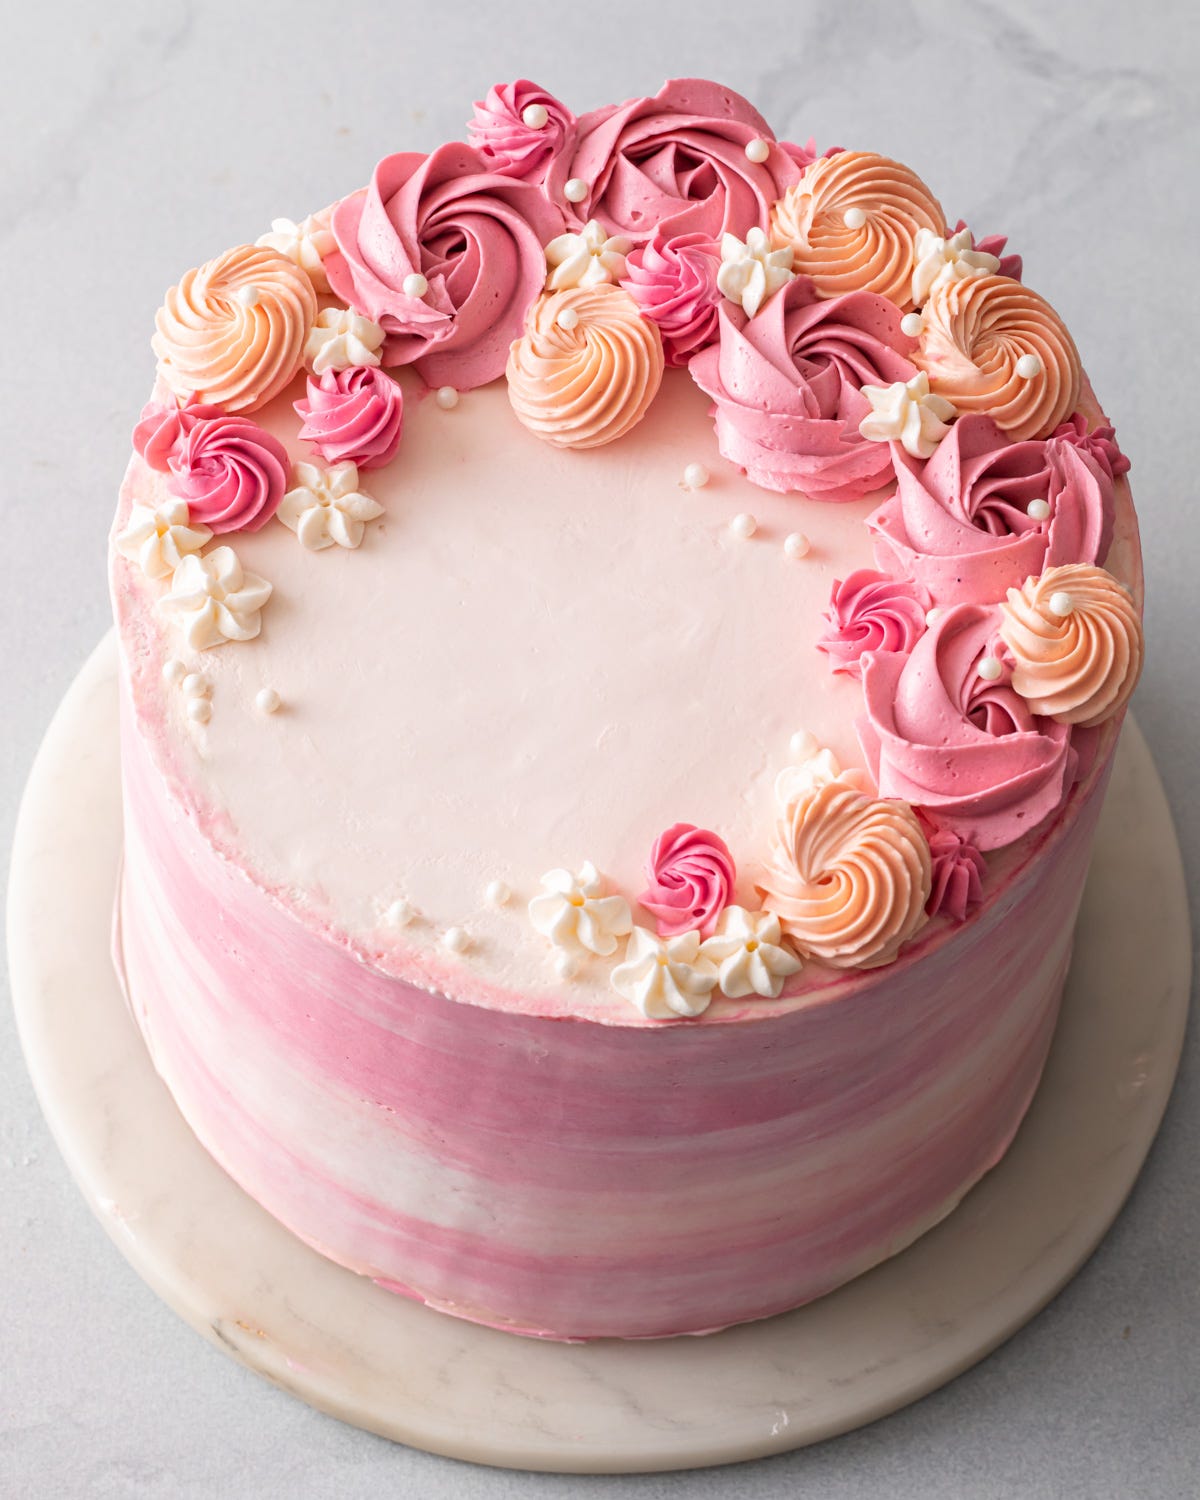 Artistic Cake Design - Harmony Cakes - Praise Wedding